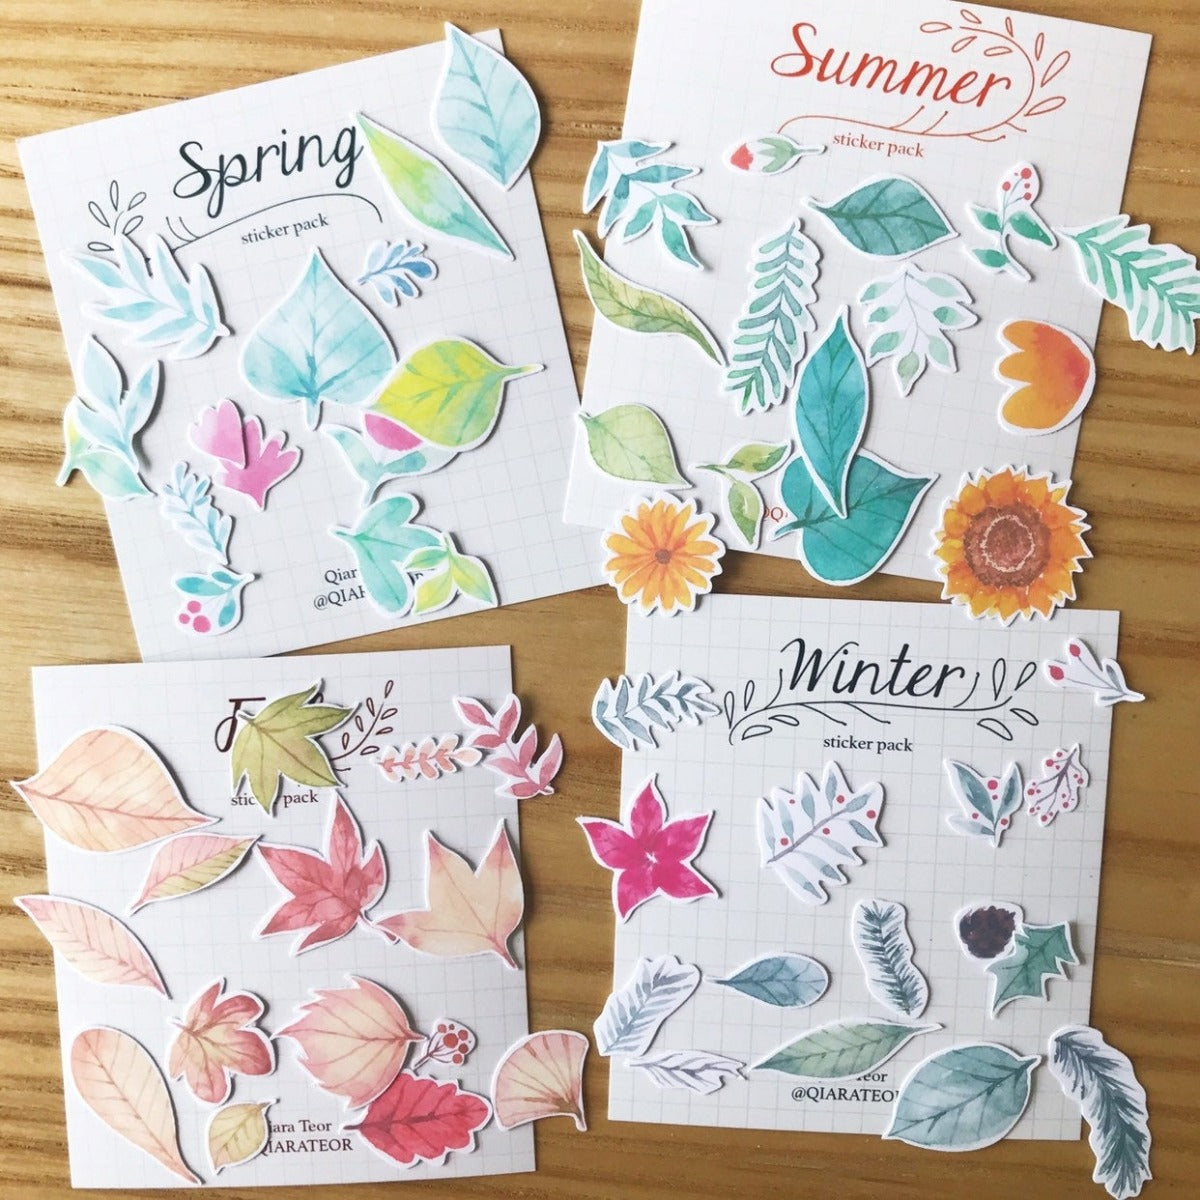 Qiara's Summer Sticker Pack